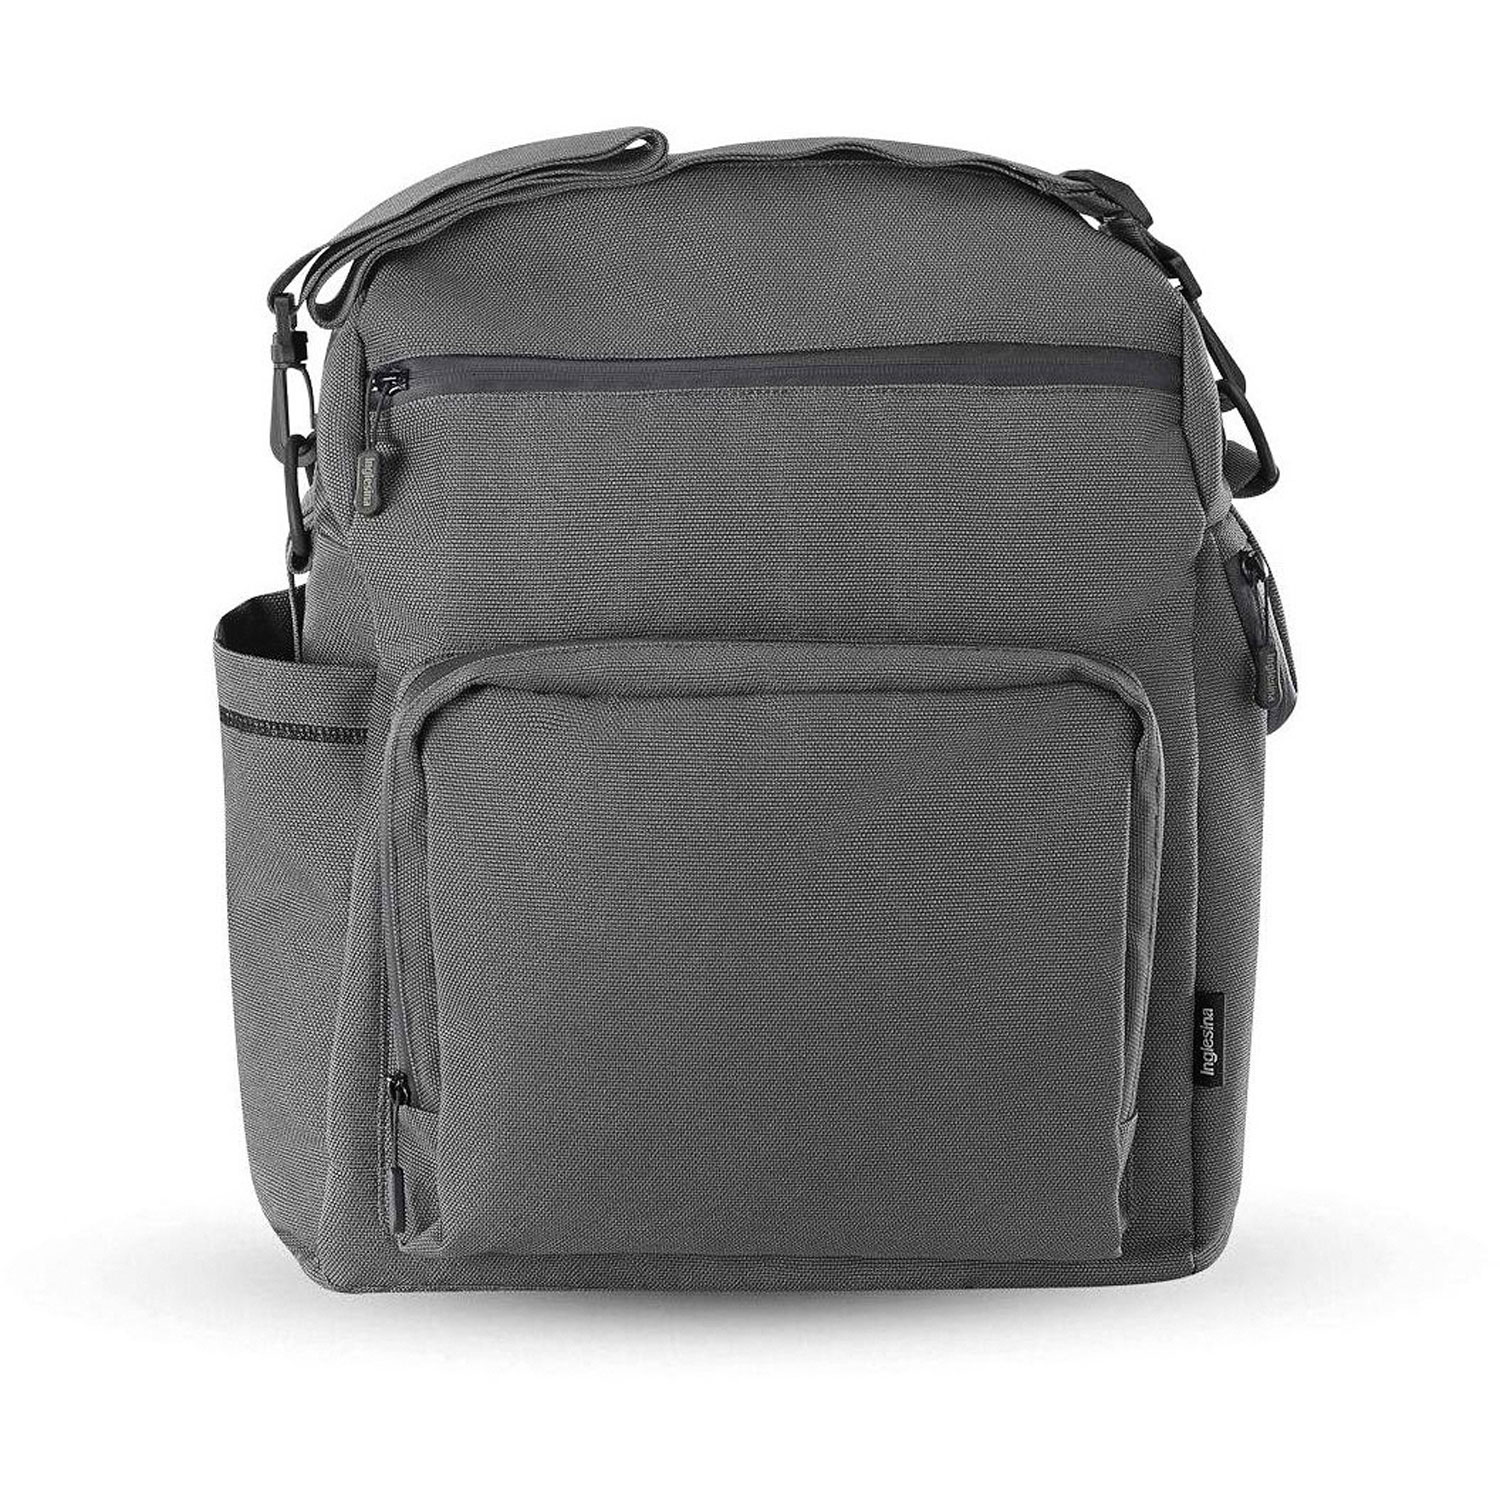 Сумка-рюкзак для коляски ADVENTURE BAG, цвет CHARCOAL GREY (2021) Inglesina сумка для коляски xt day bag magnet grey inglesina